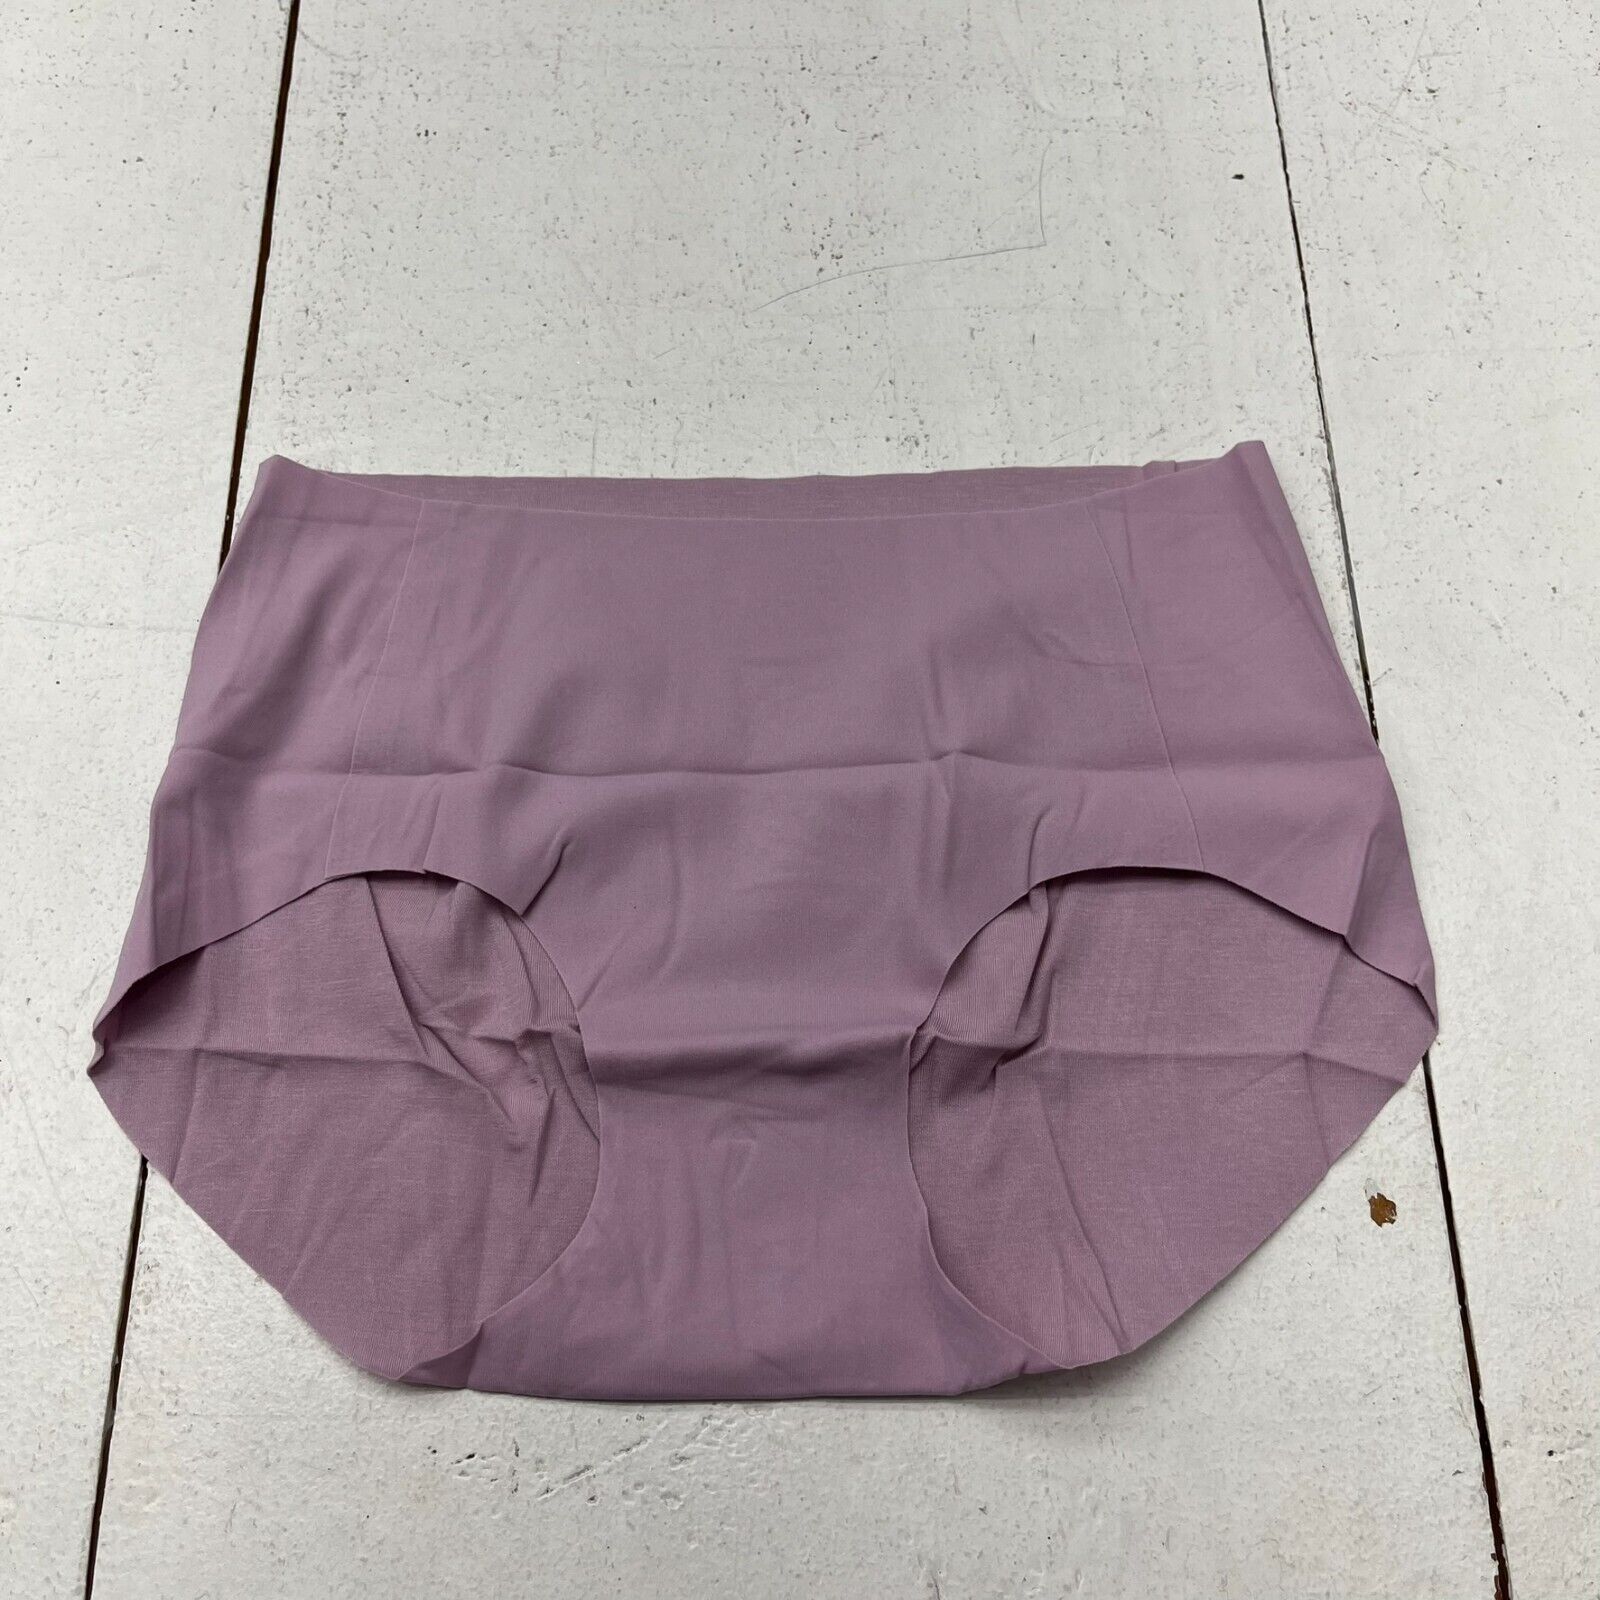 Neiwai Purple High Rise Cheeky Underwear Women's One Size NEW - beyond  exchange